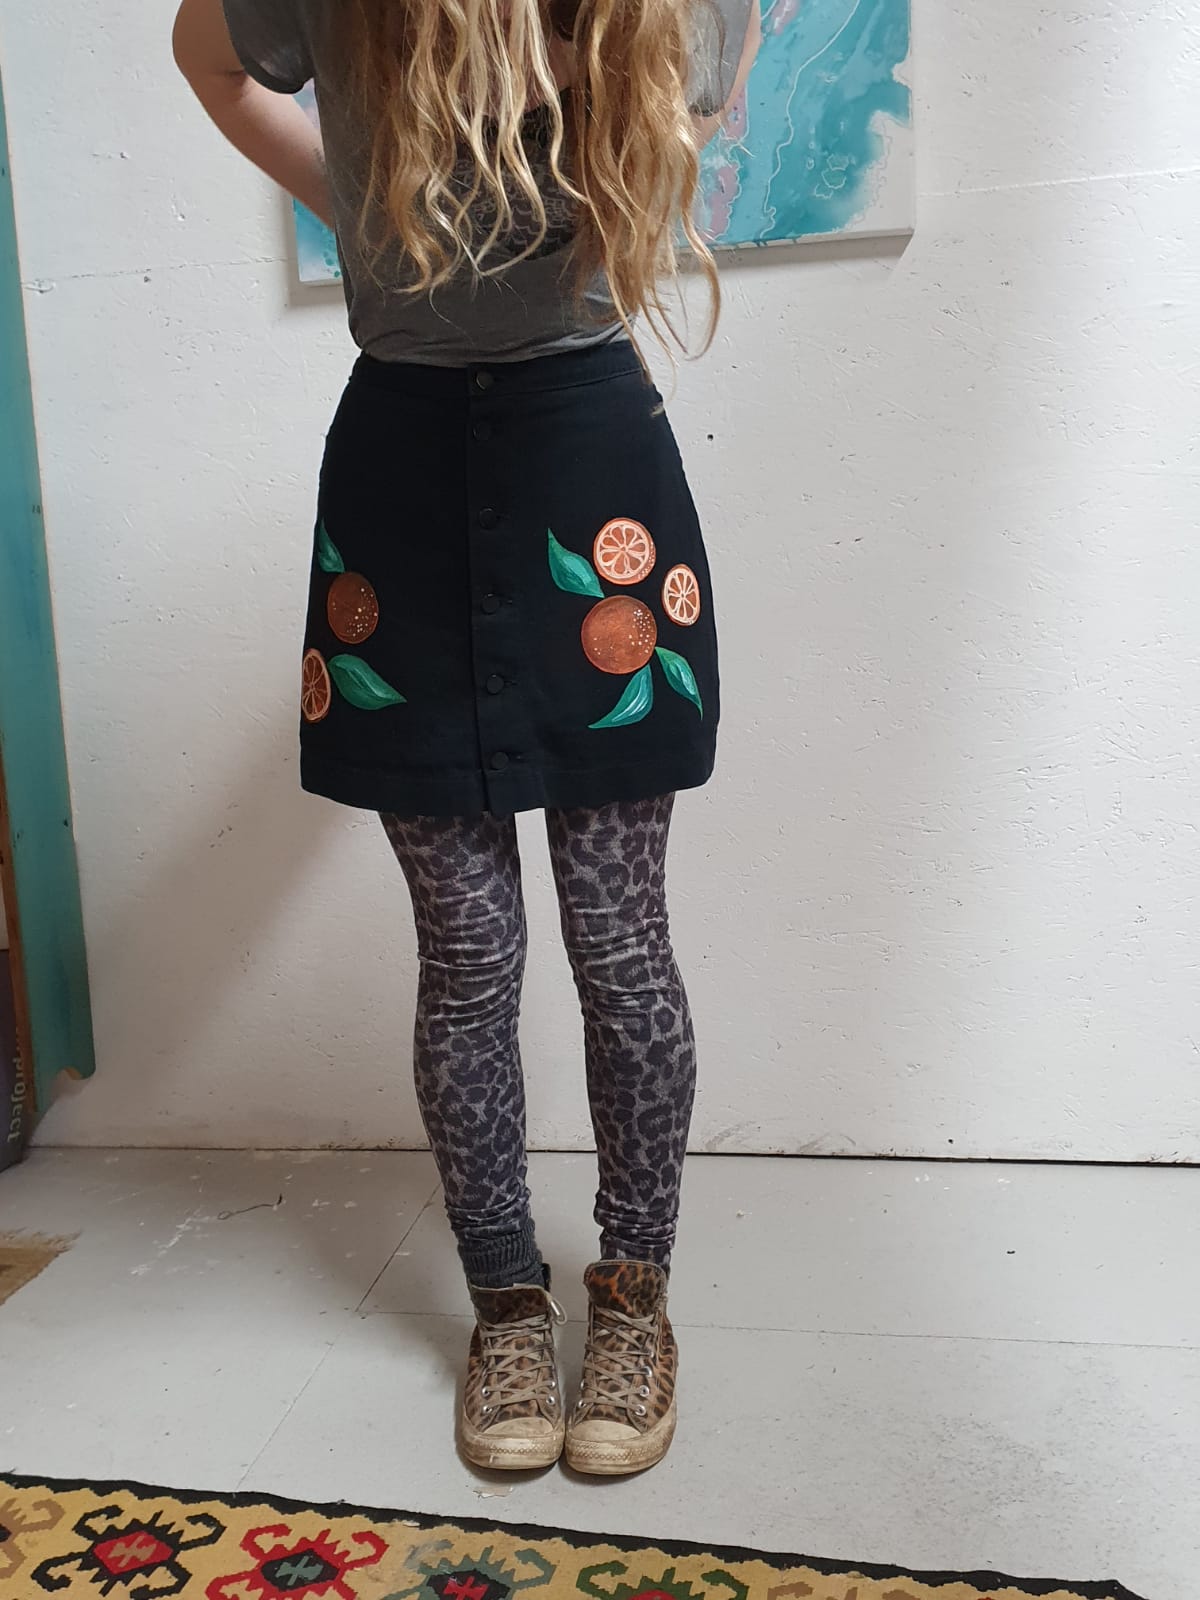 'Tangerine' Hand painted up-cycled black denim mini skirt